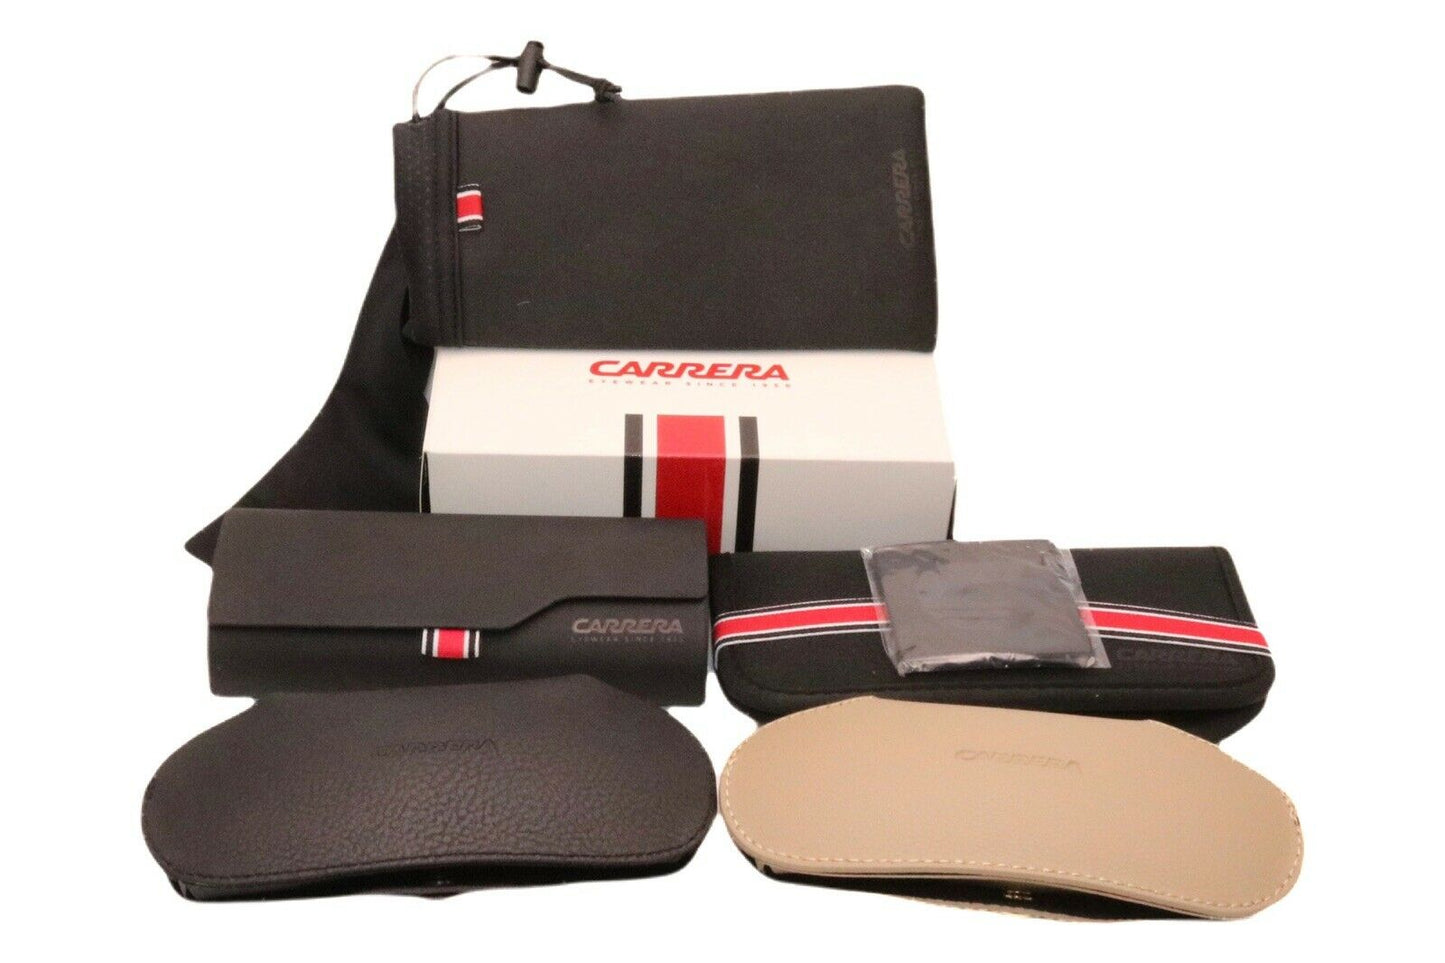 Carrera CARDUC 001/S-00A4 UZ 57mm New Sunglasses